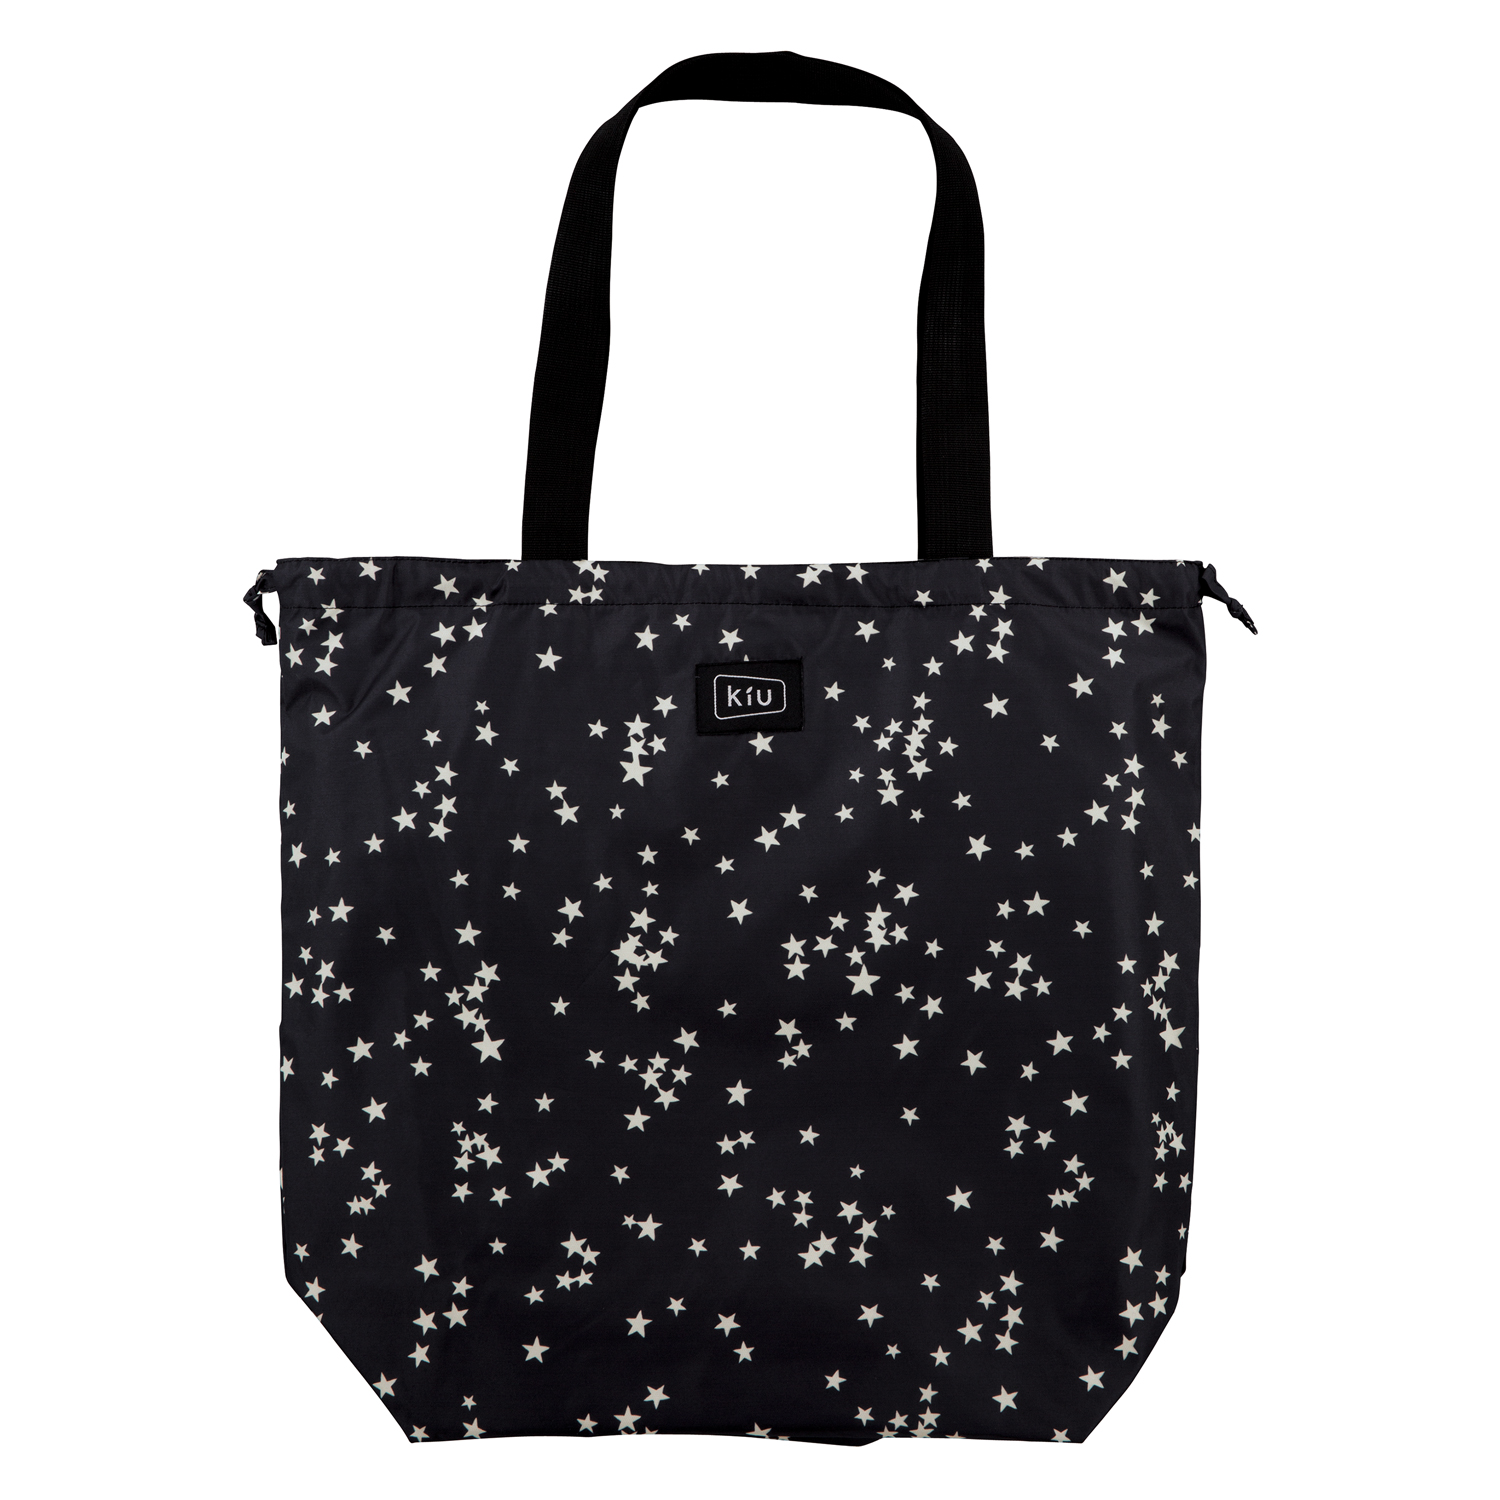 Star Dust - 2way Rain Bag Cover (K82-059)